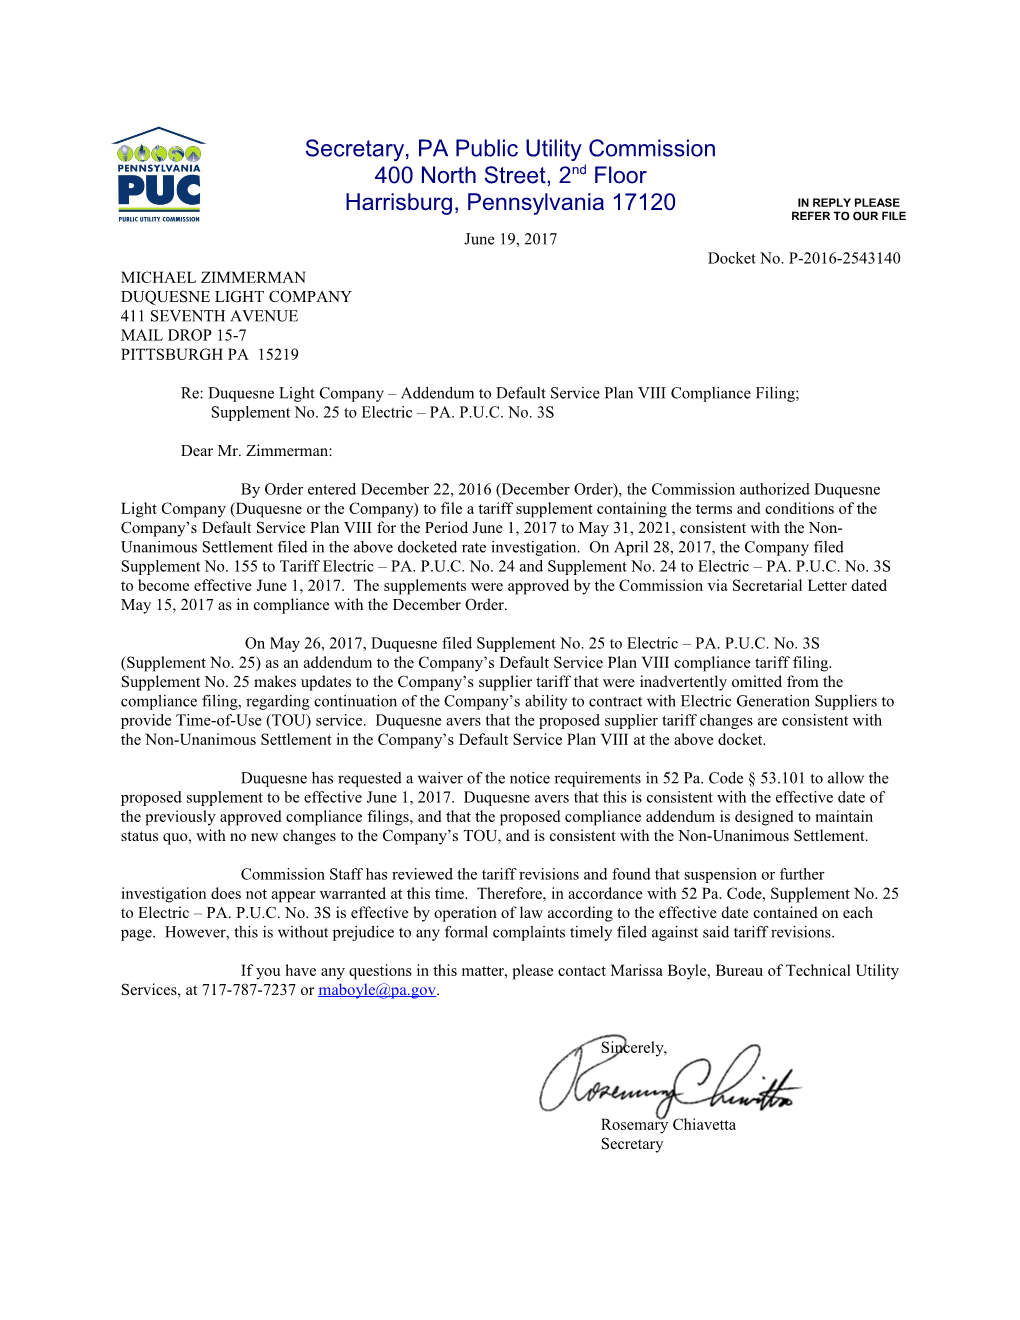 Re: Duquesne Light Company Addendum to Default Service Plan VIII Compliance Filing;